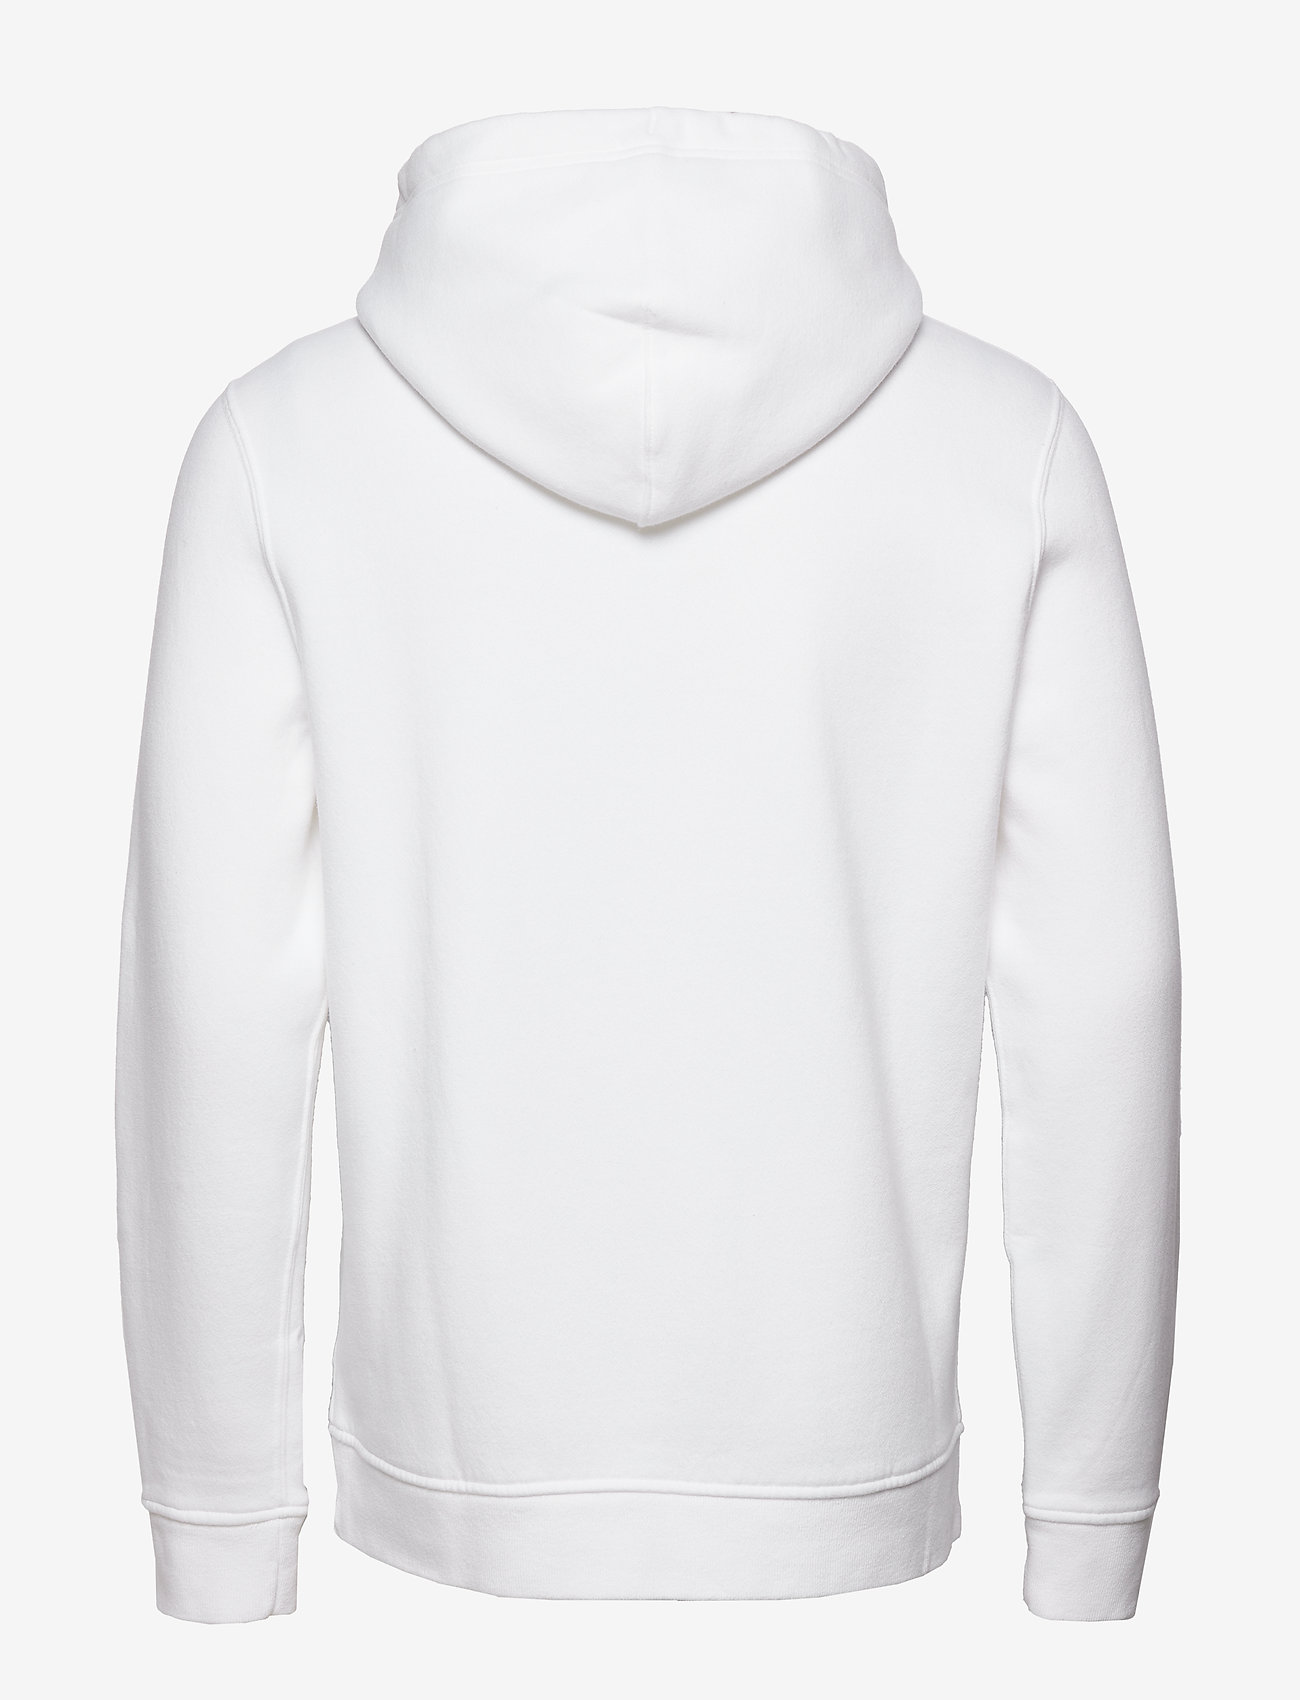 abercrombie hoodie white